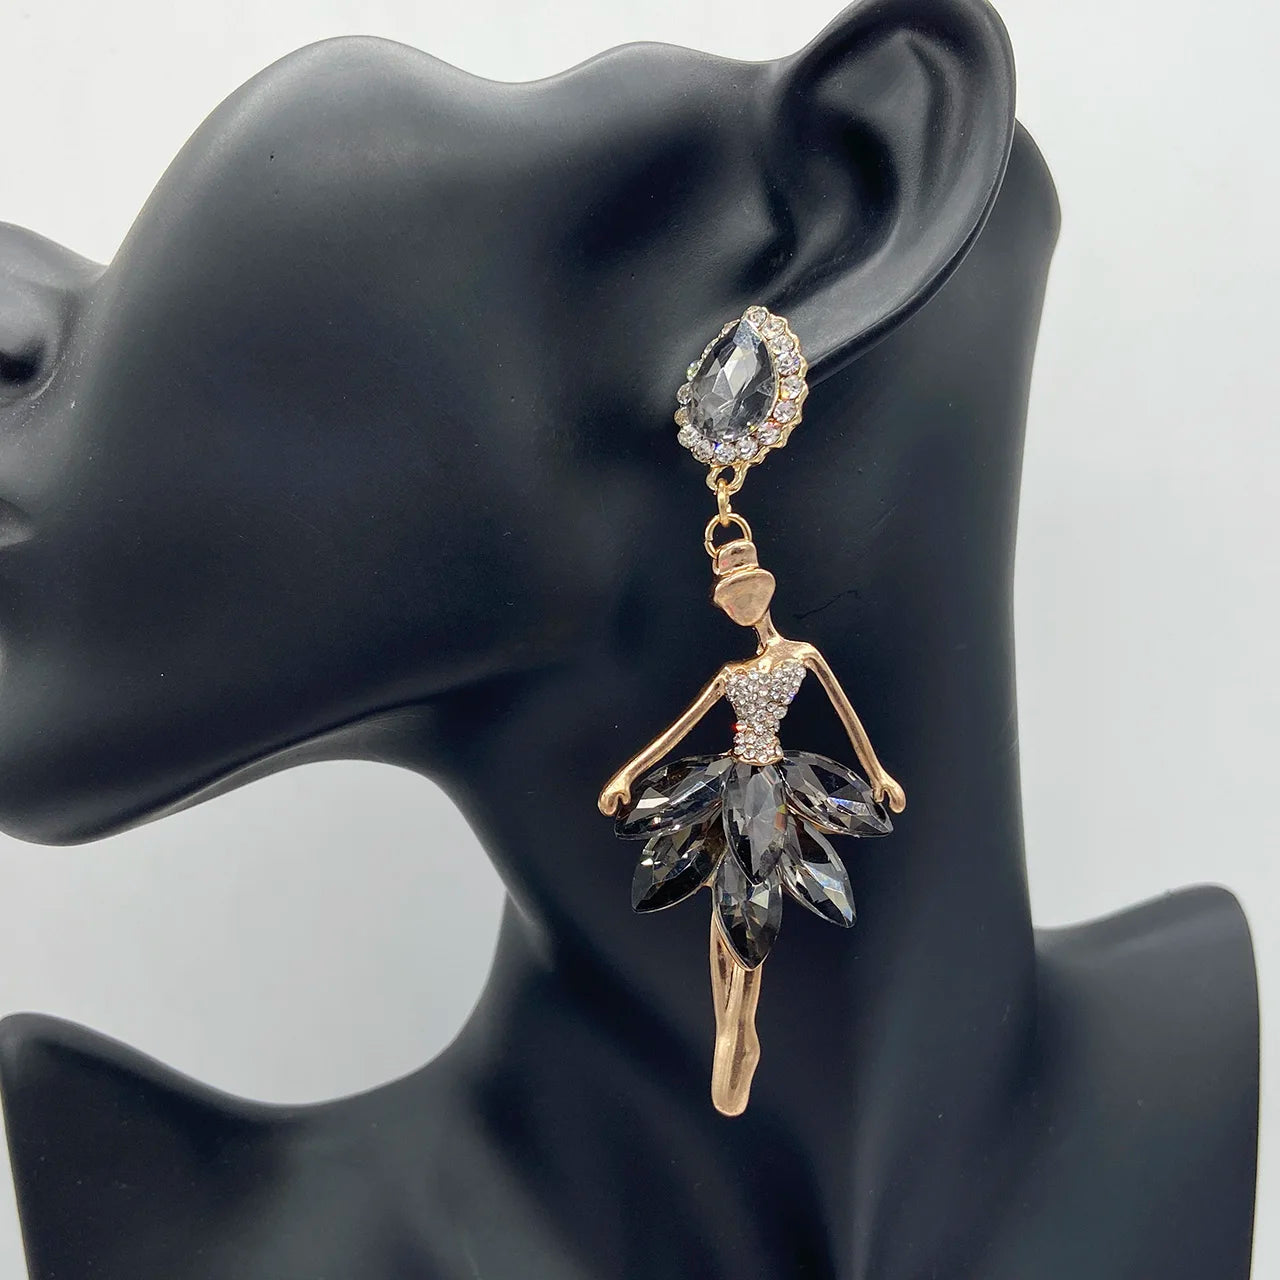 The Sabine Ballerina Earrings